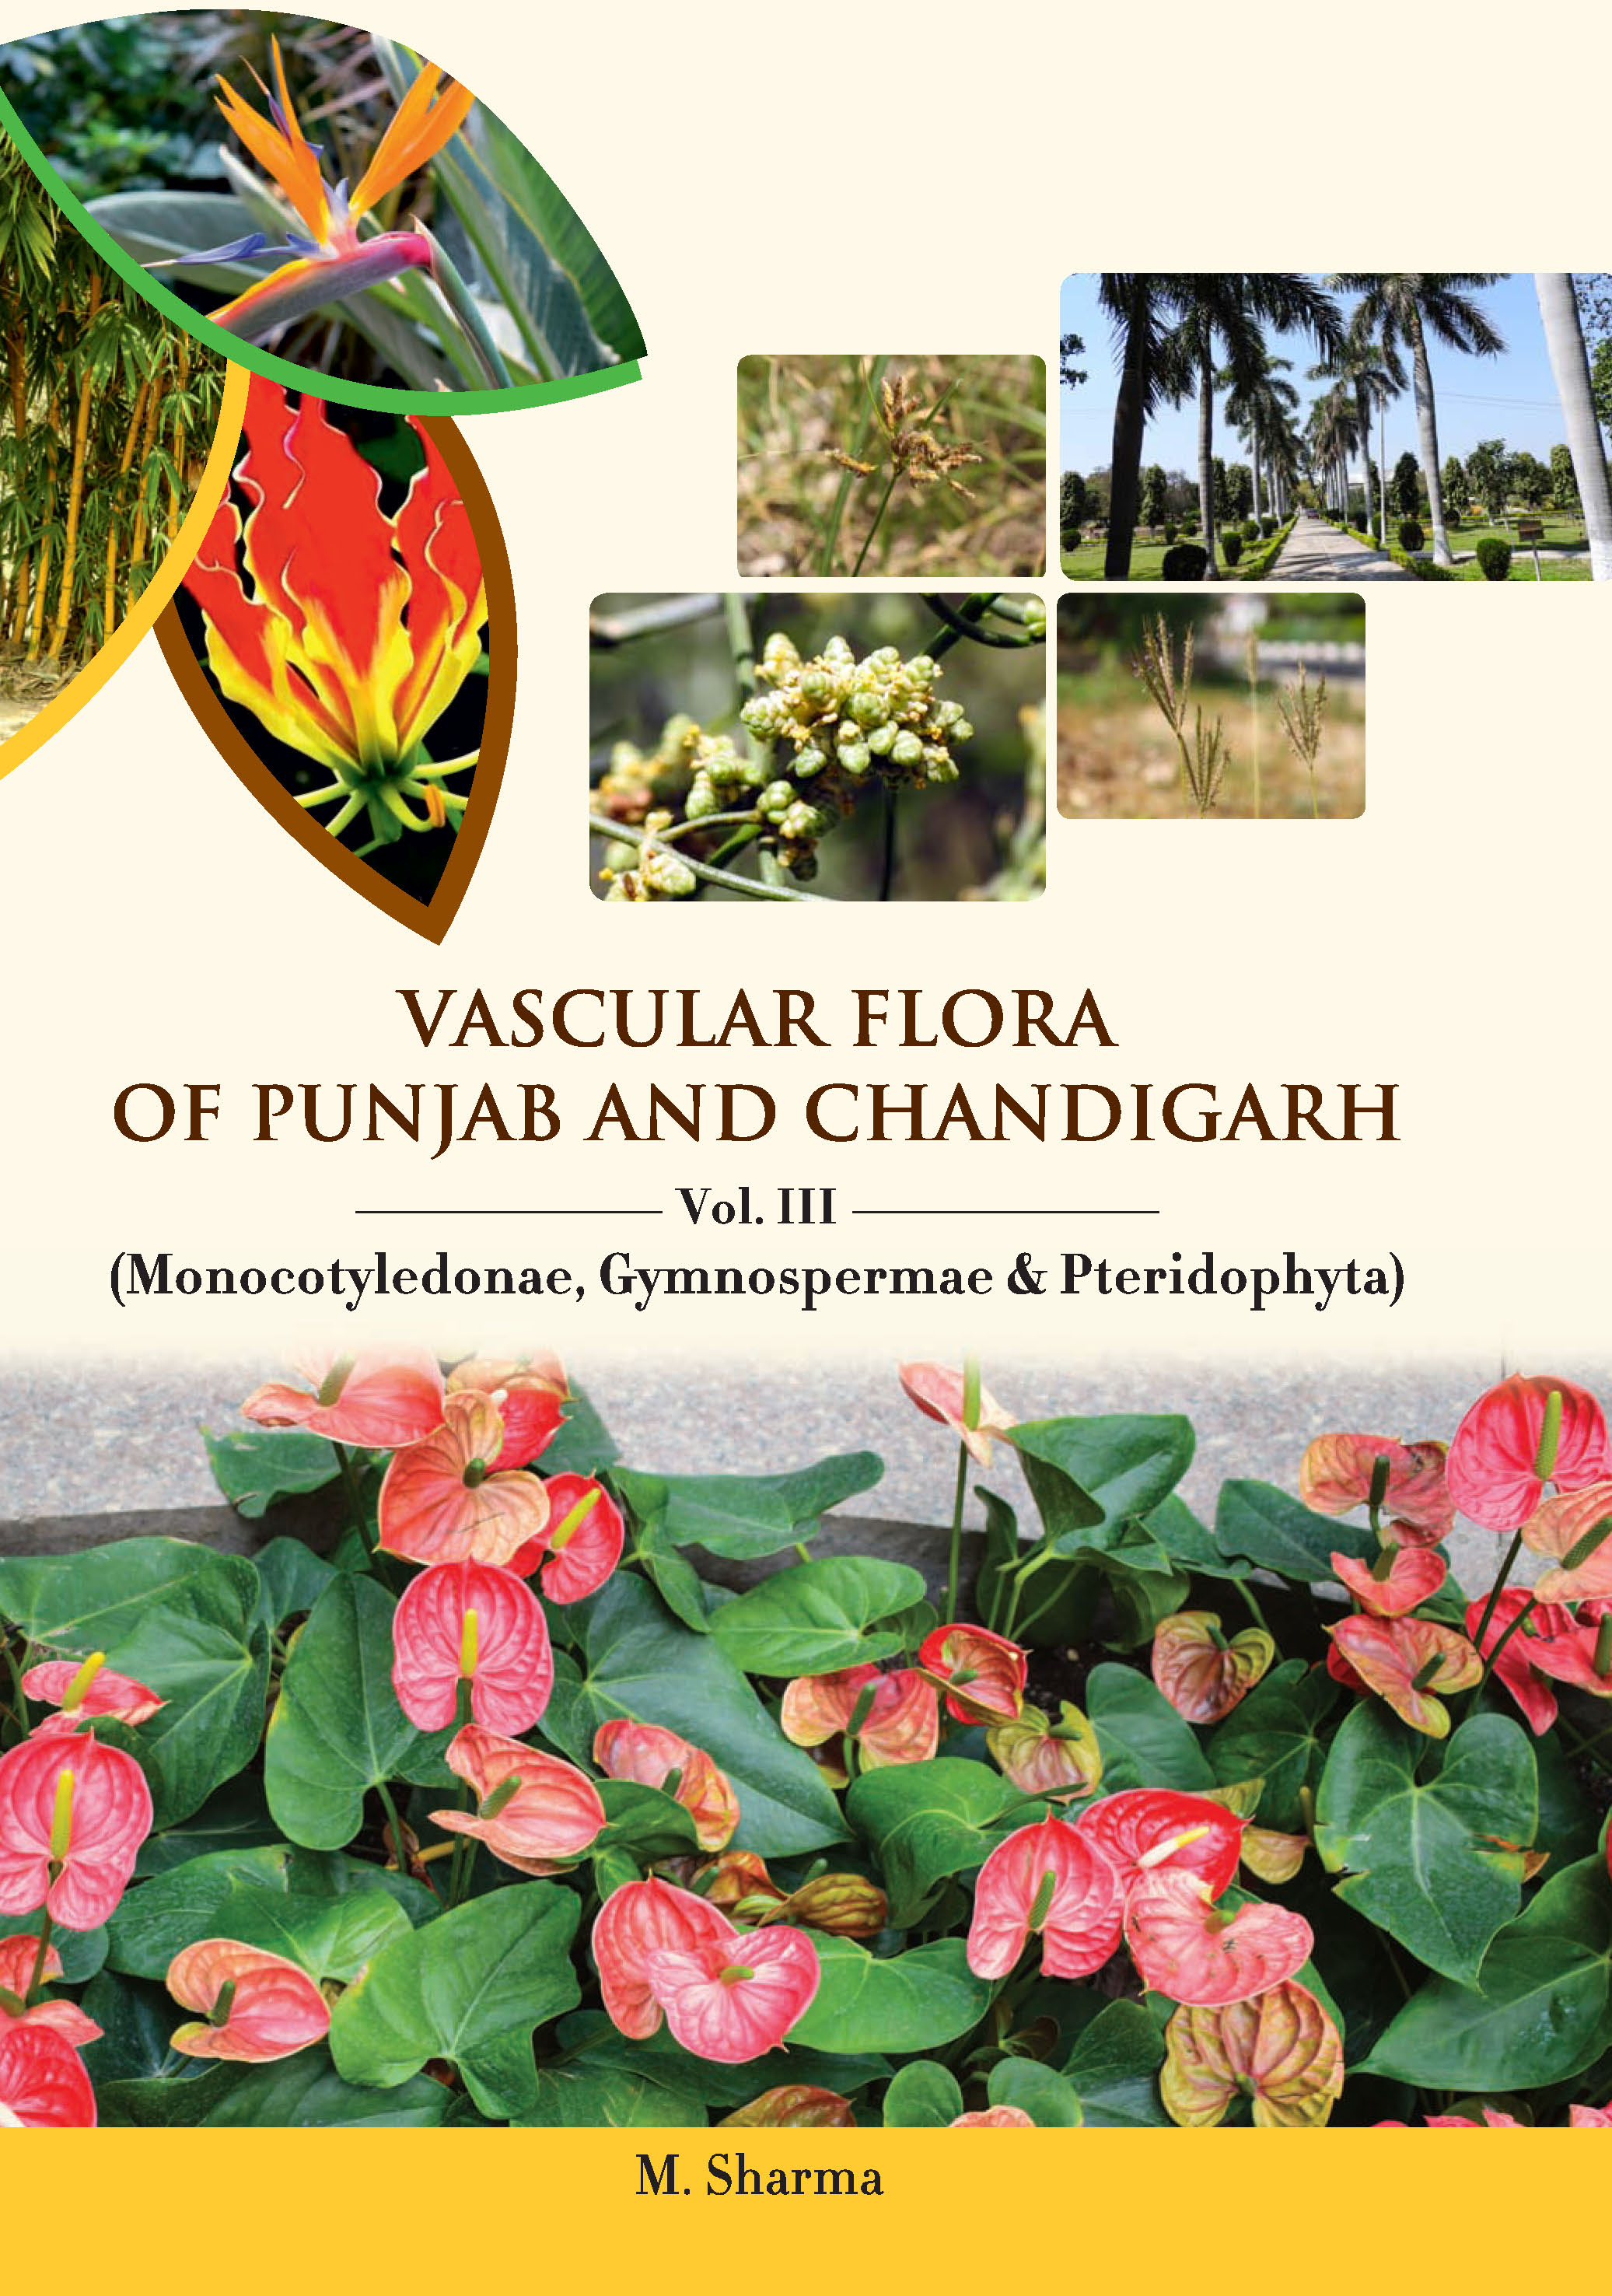 Vascular Flora of Punjaband Chandigarh Volume 3.jpg